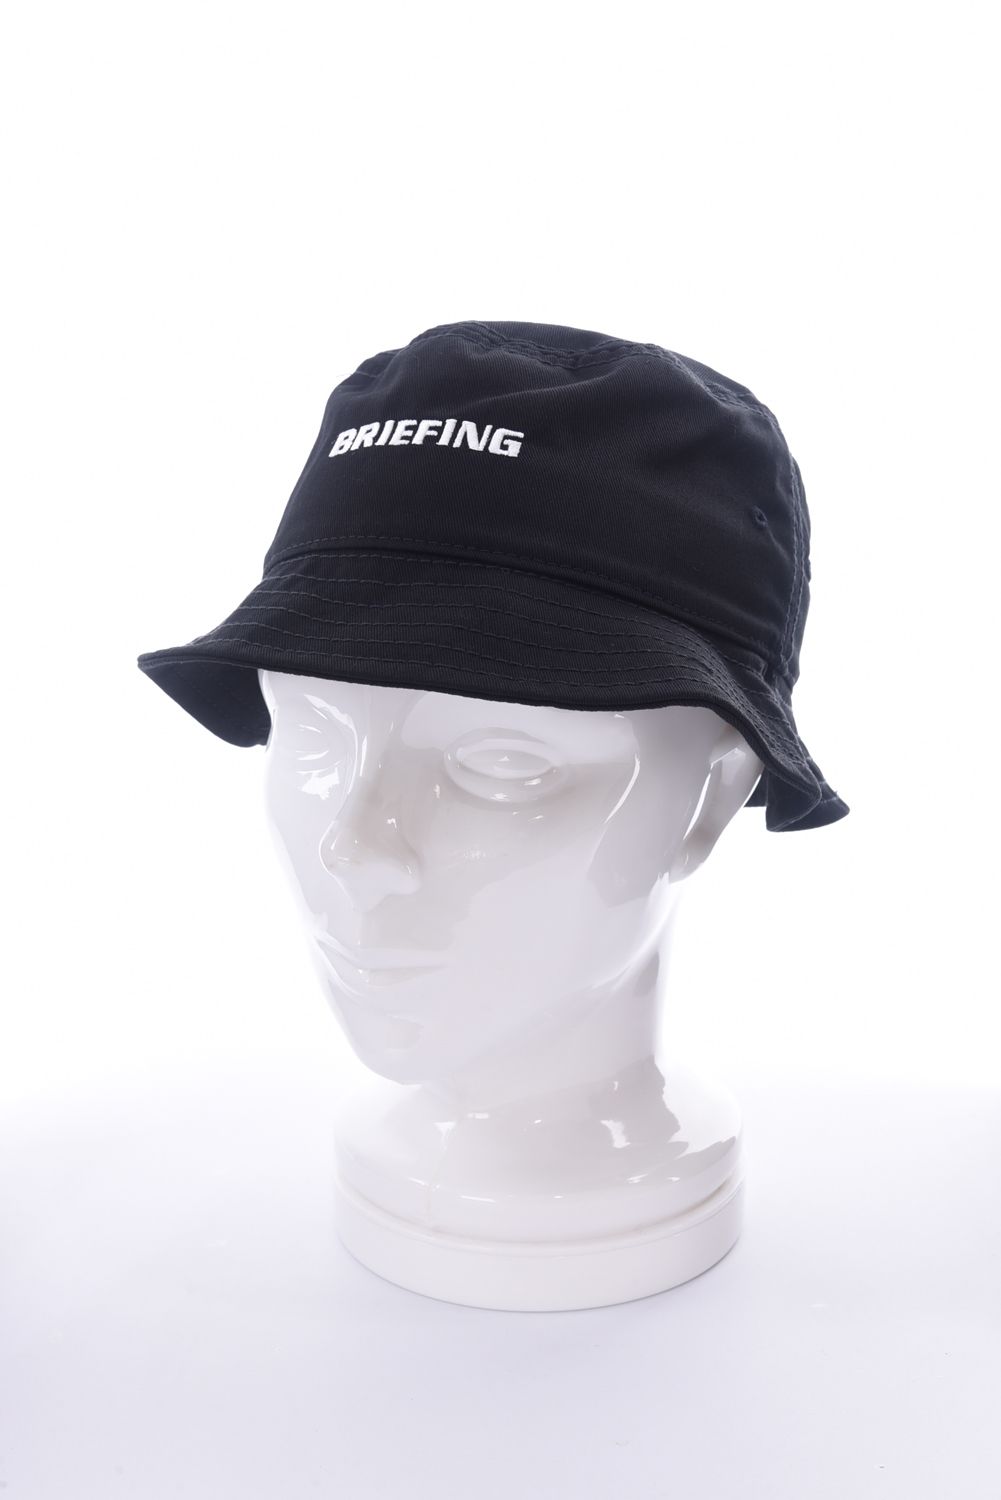 BRIEFING - BASIC HAT / 刺繍ロゴ ベーシック バケットハット ネイビー